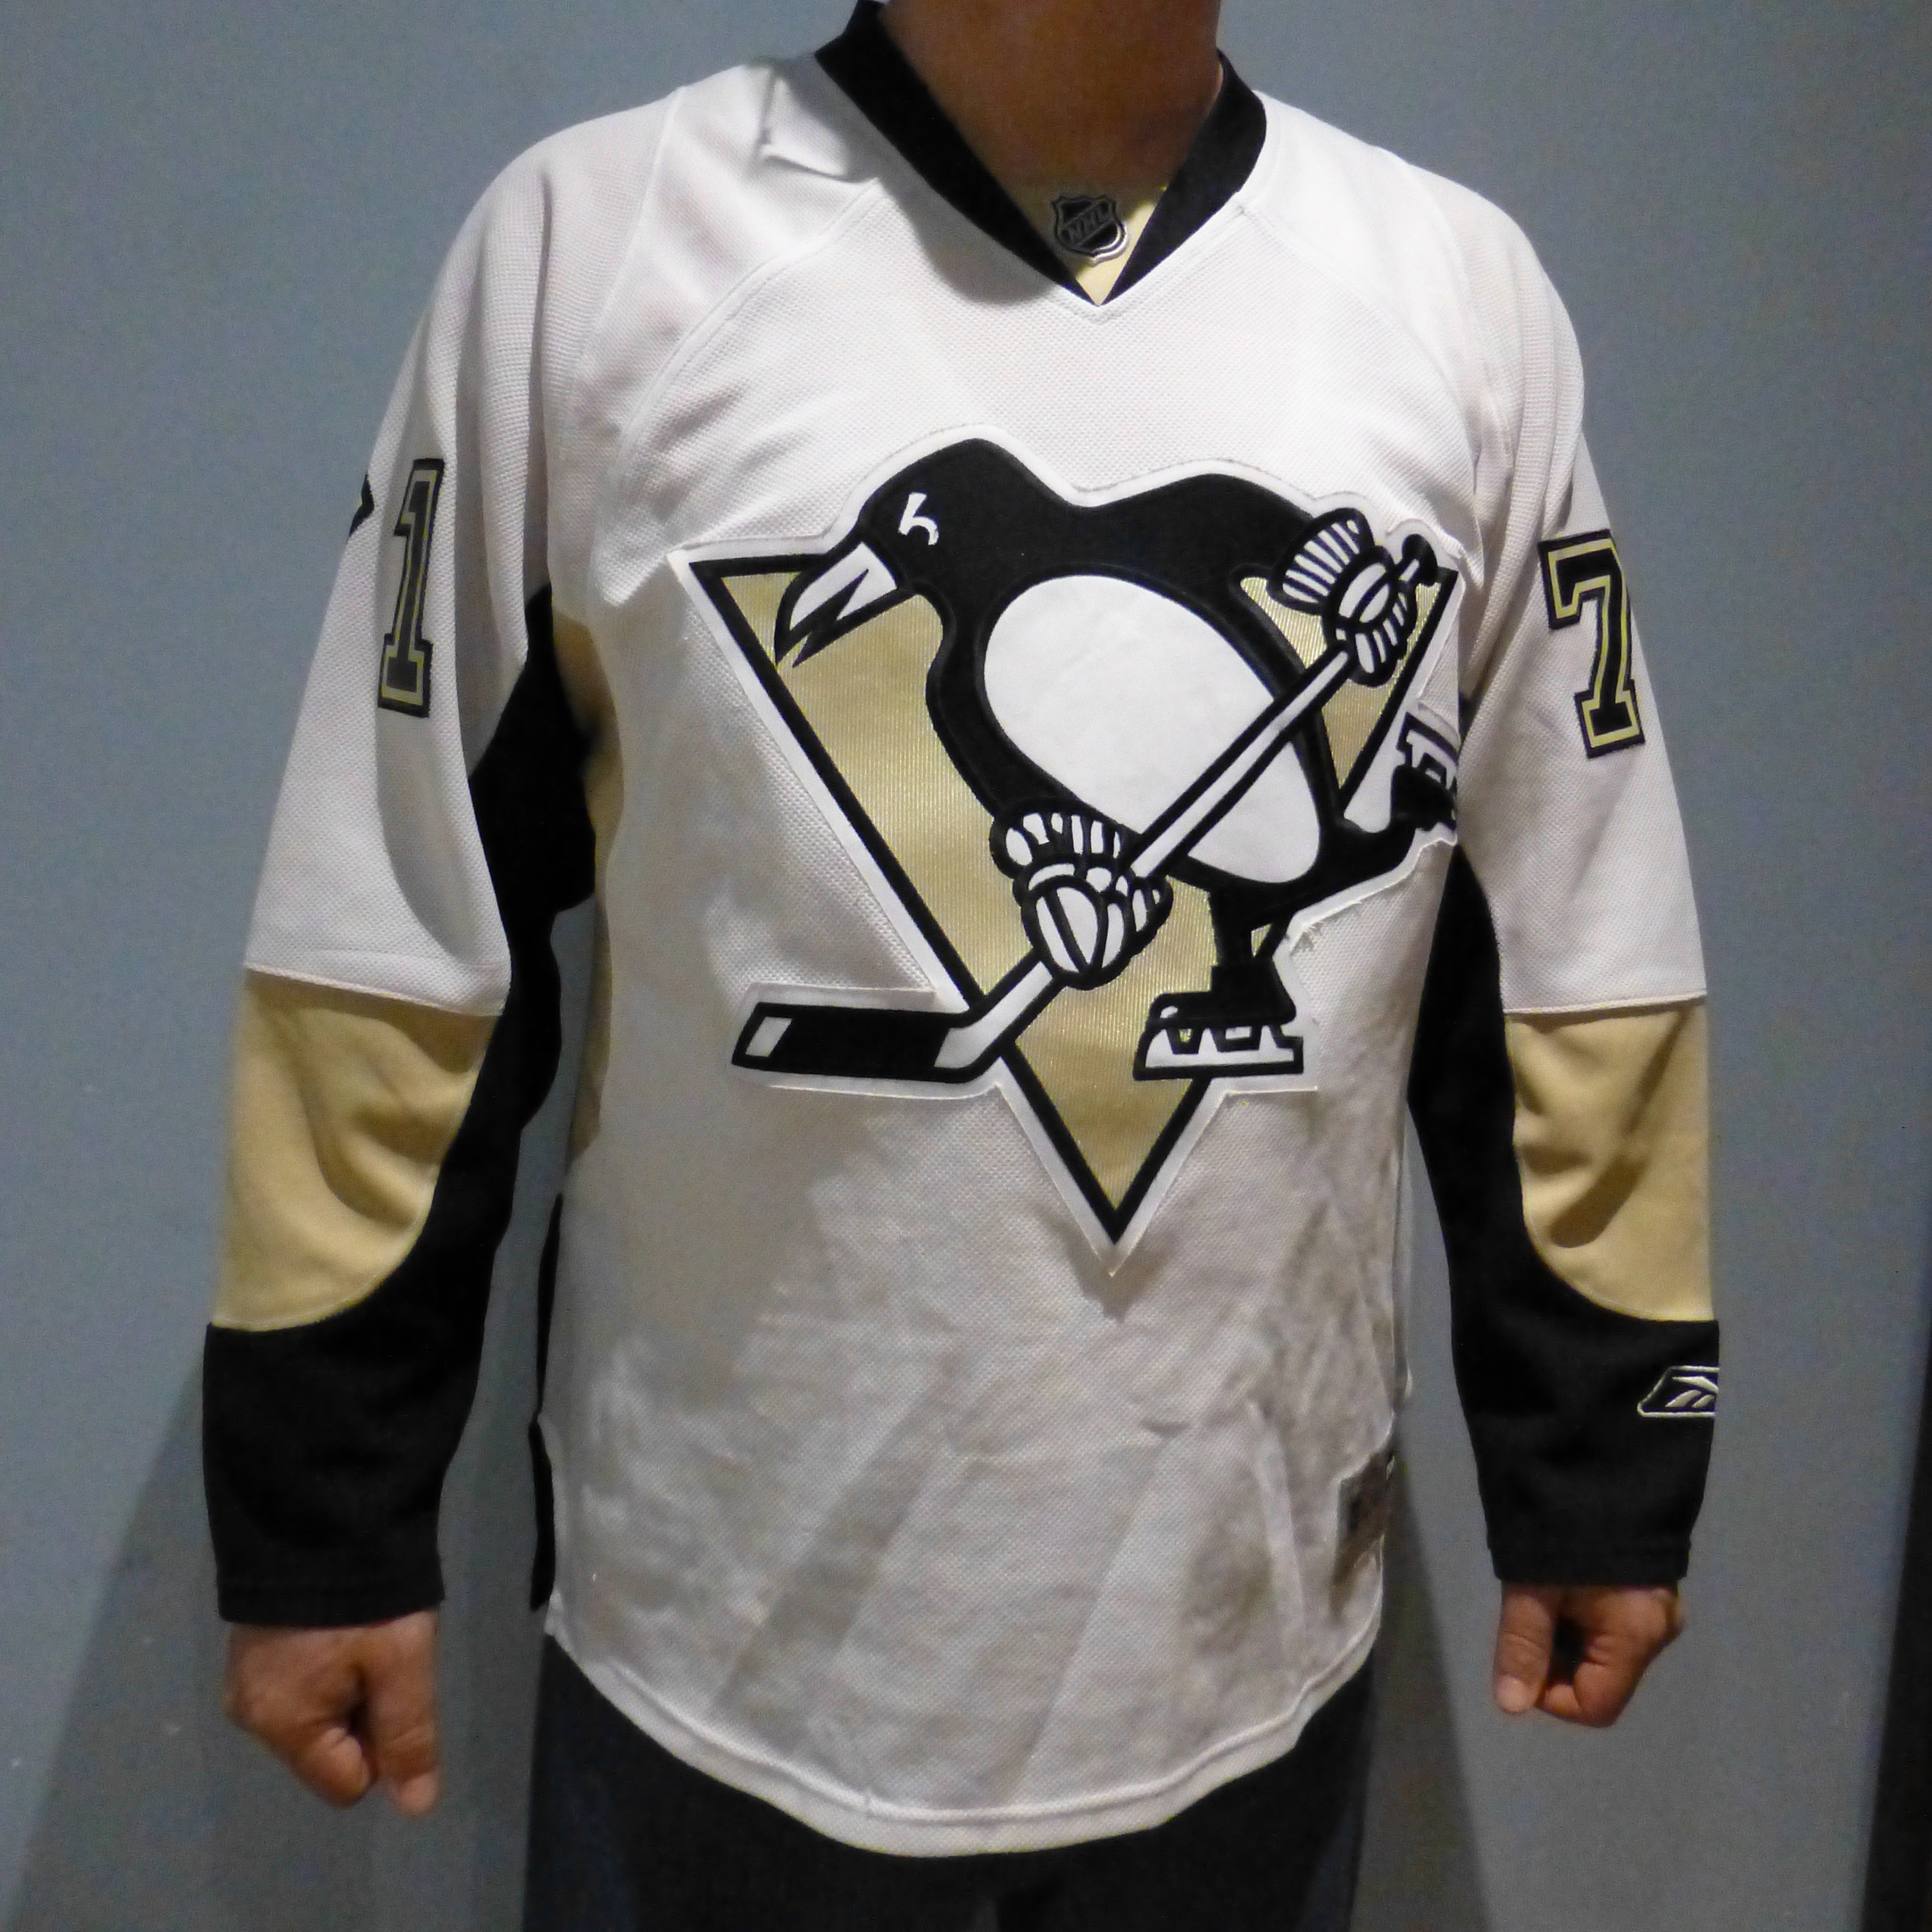 Evgeni Malkin Pittsburgh Penguins 2011 winter classic jersey Size S/M